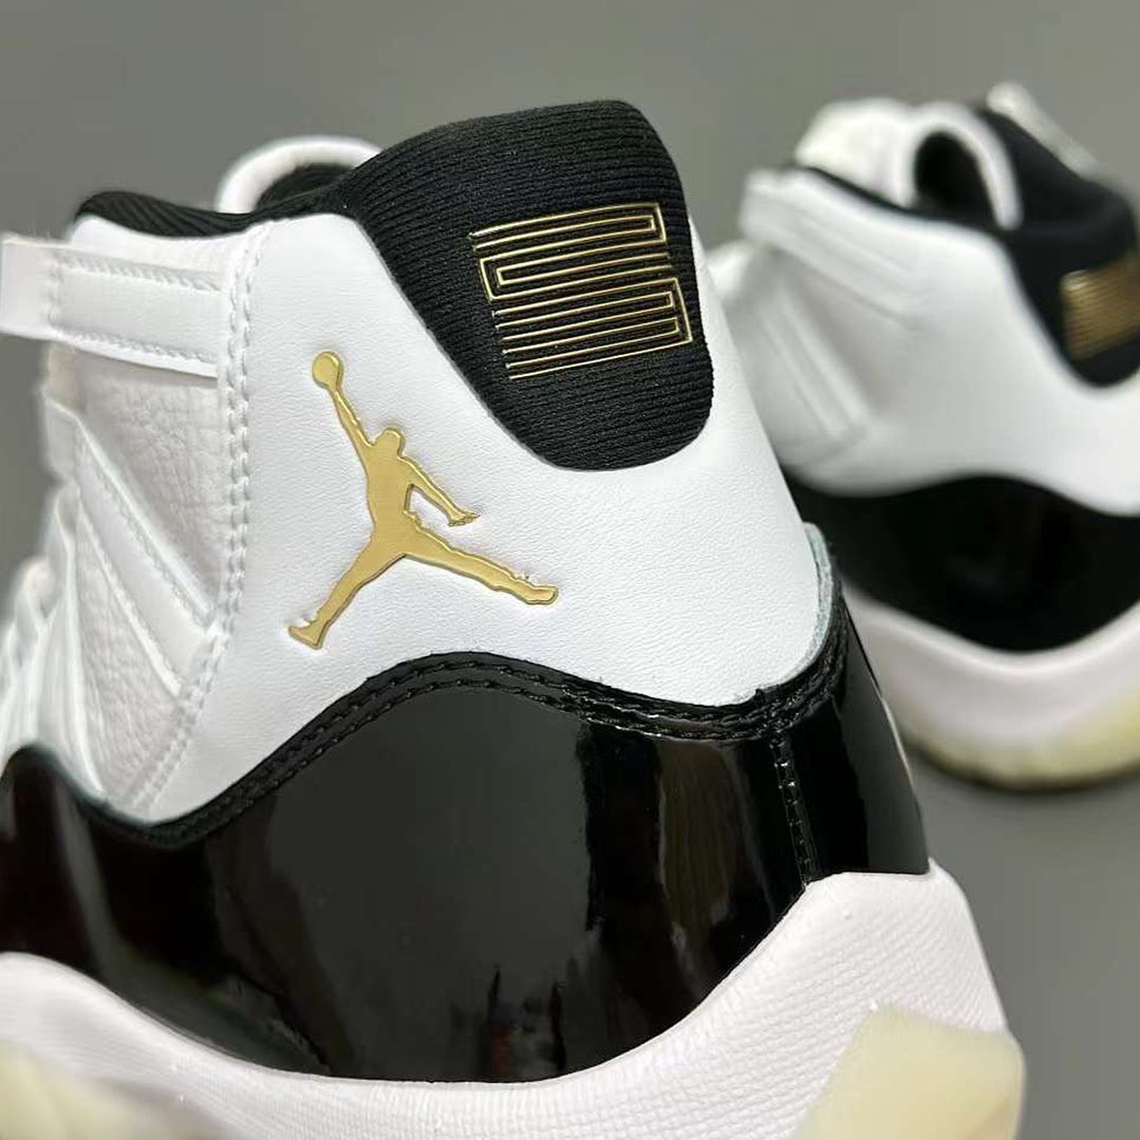 The Air Jordan 11 Gratitude Releases December 2023 - Sneaker News